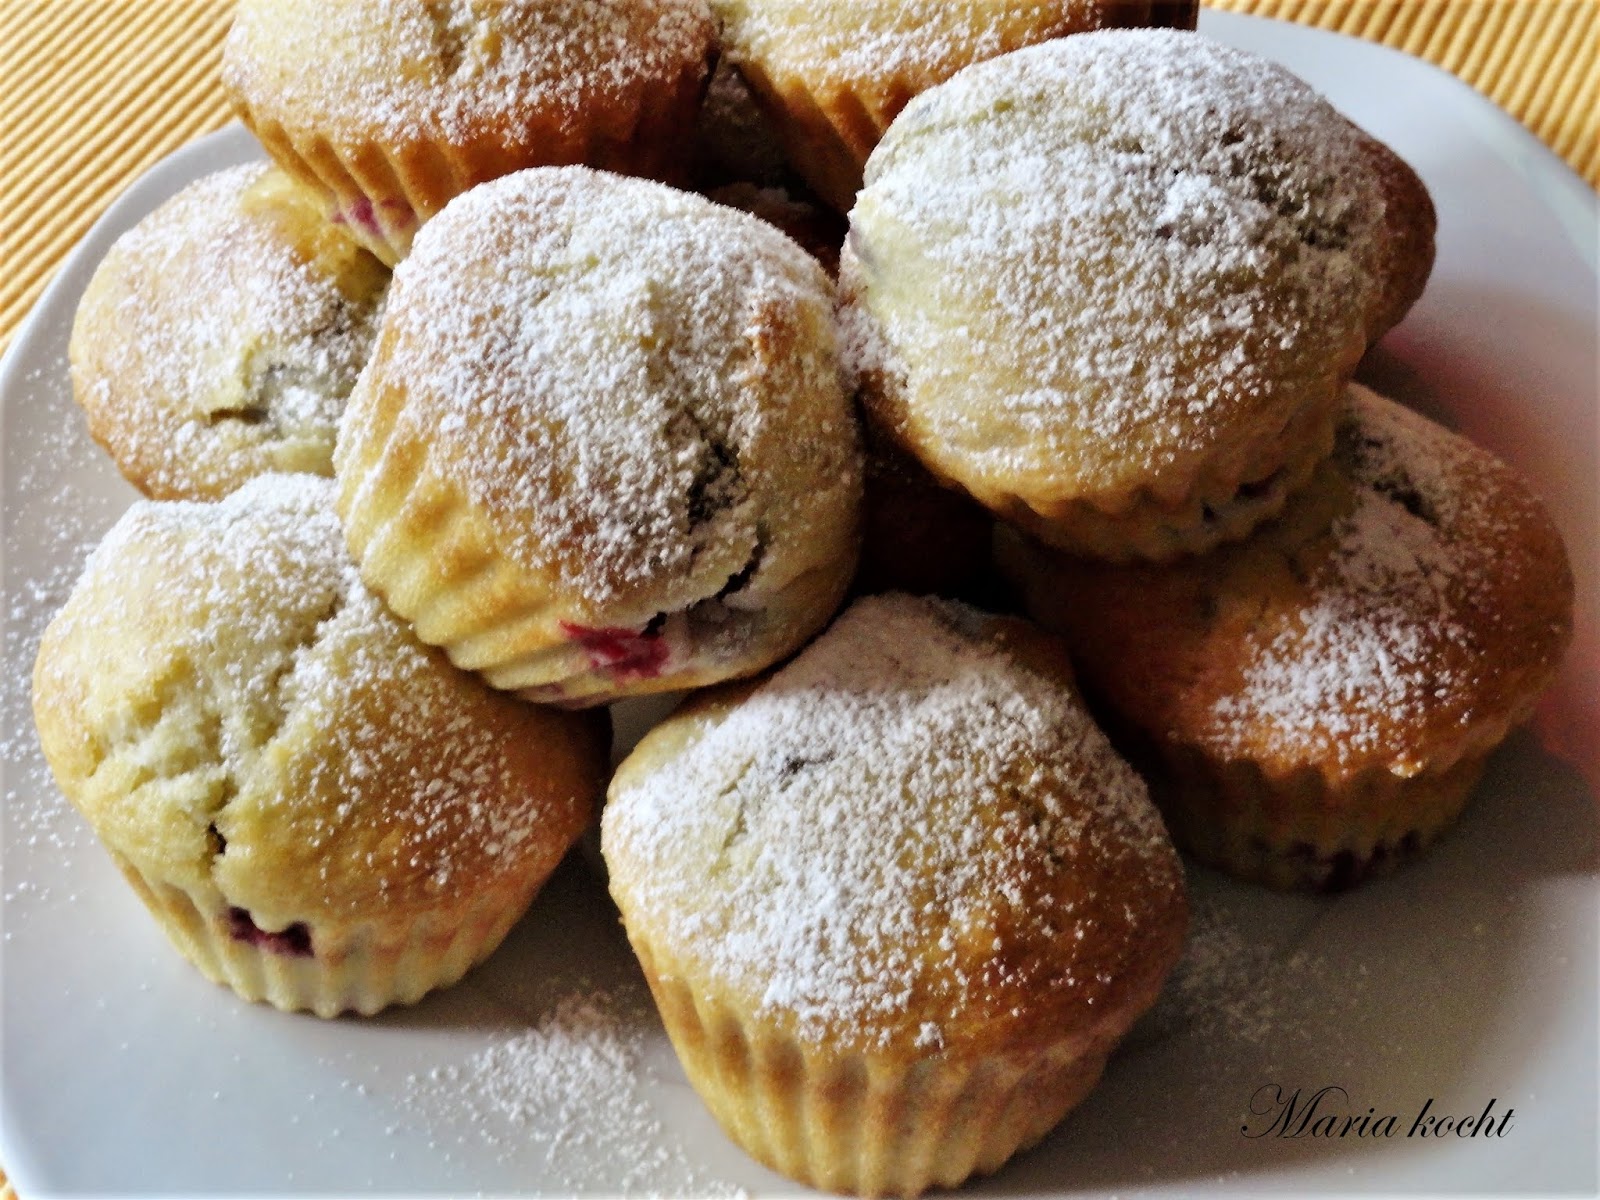 Maria kocht: Himbeer-Buttermilch-Muffins / Málnás írós muffin